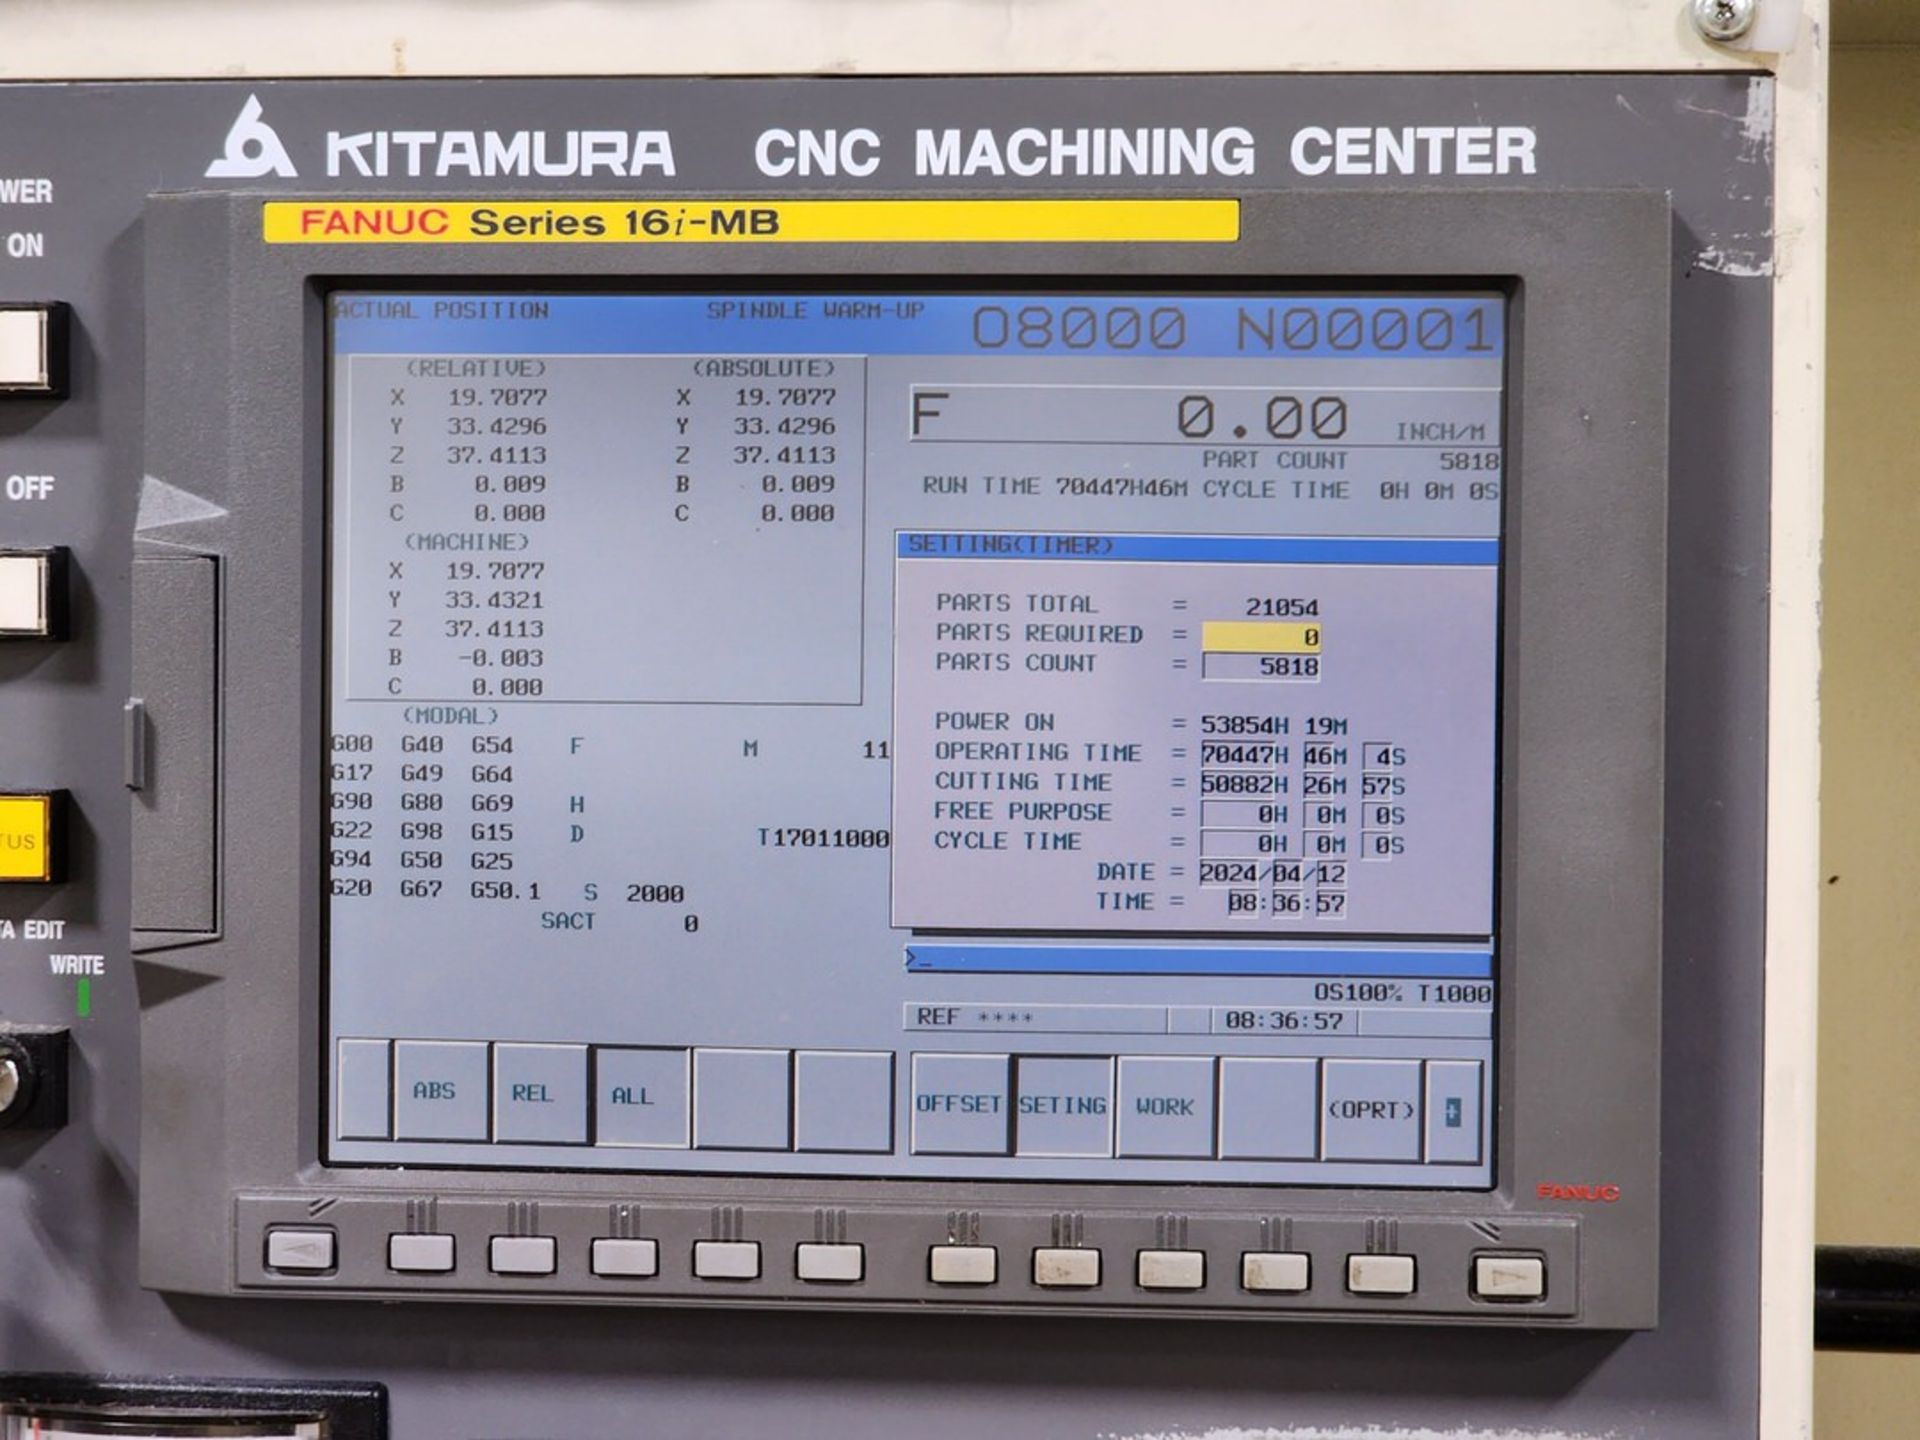 2006 Kitamura XL500ID Horizontal Machining Center W/ Fanuc Series 16i-MB Controller, 12,000 Spindle - Image 17 of 17